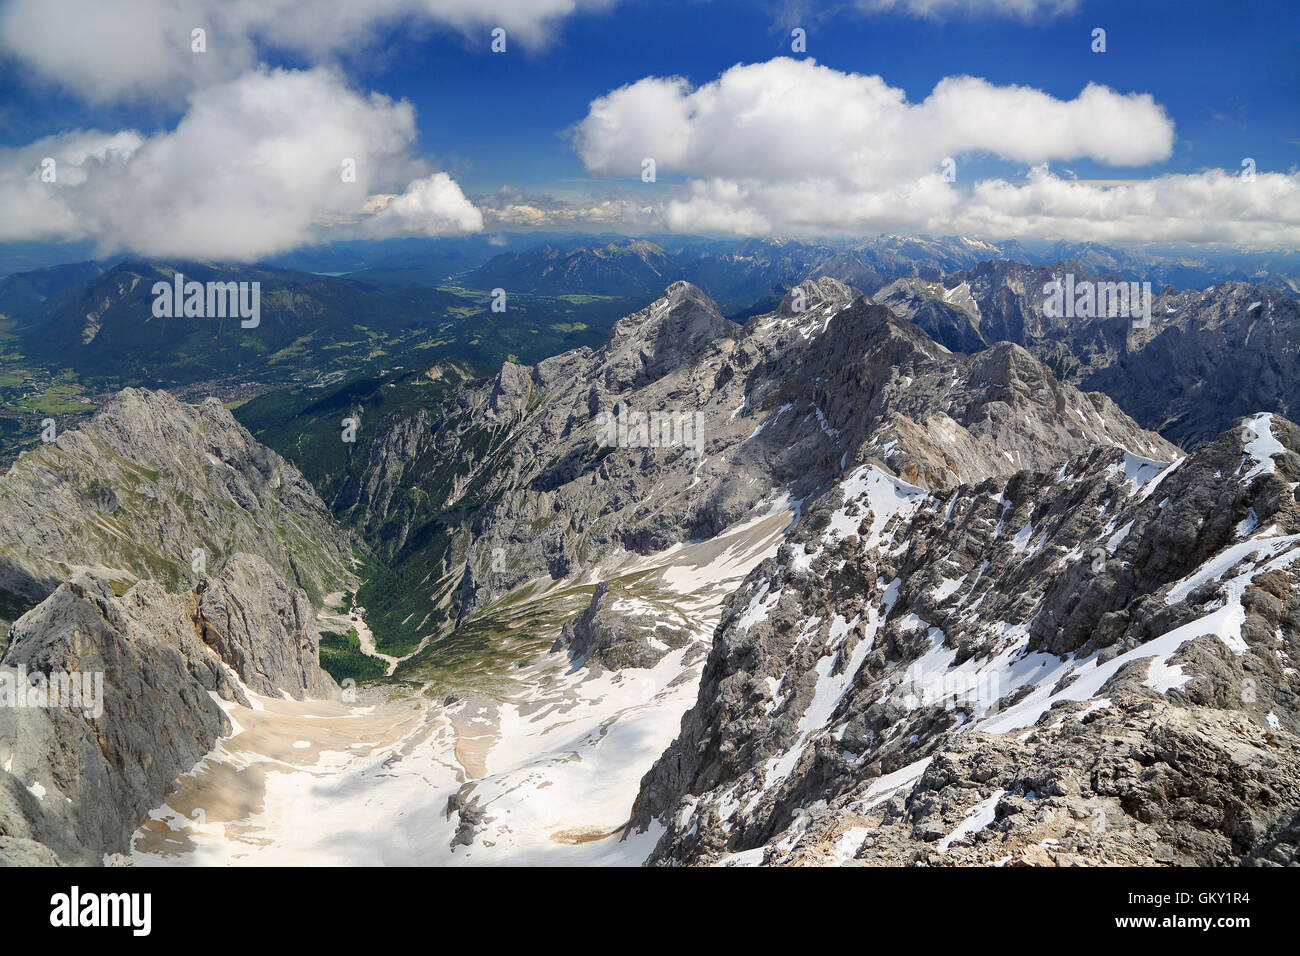 Alps mountains near Zugspitze, Germany Stock Photo